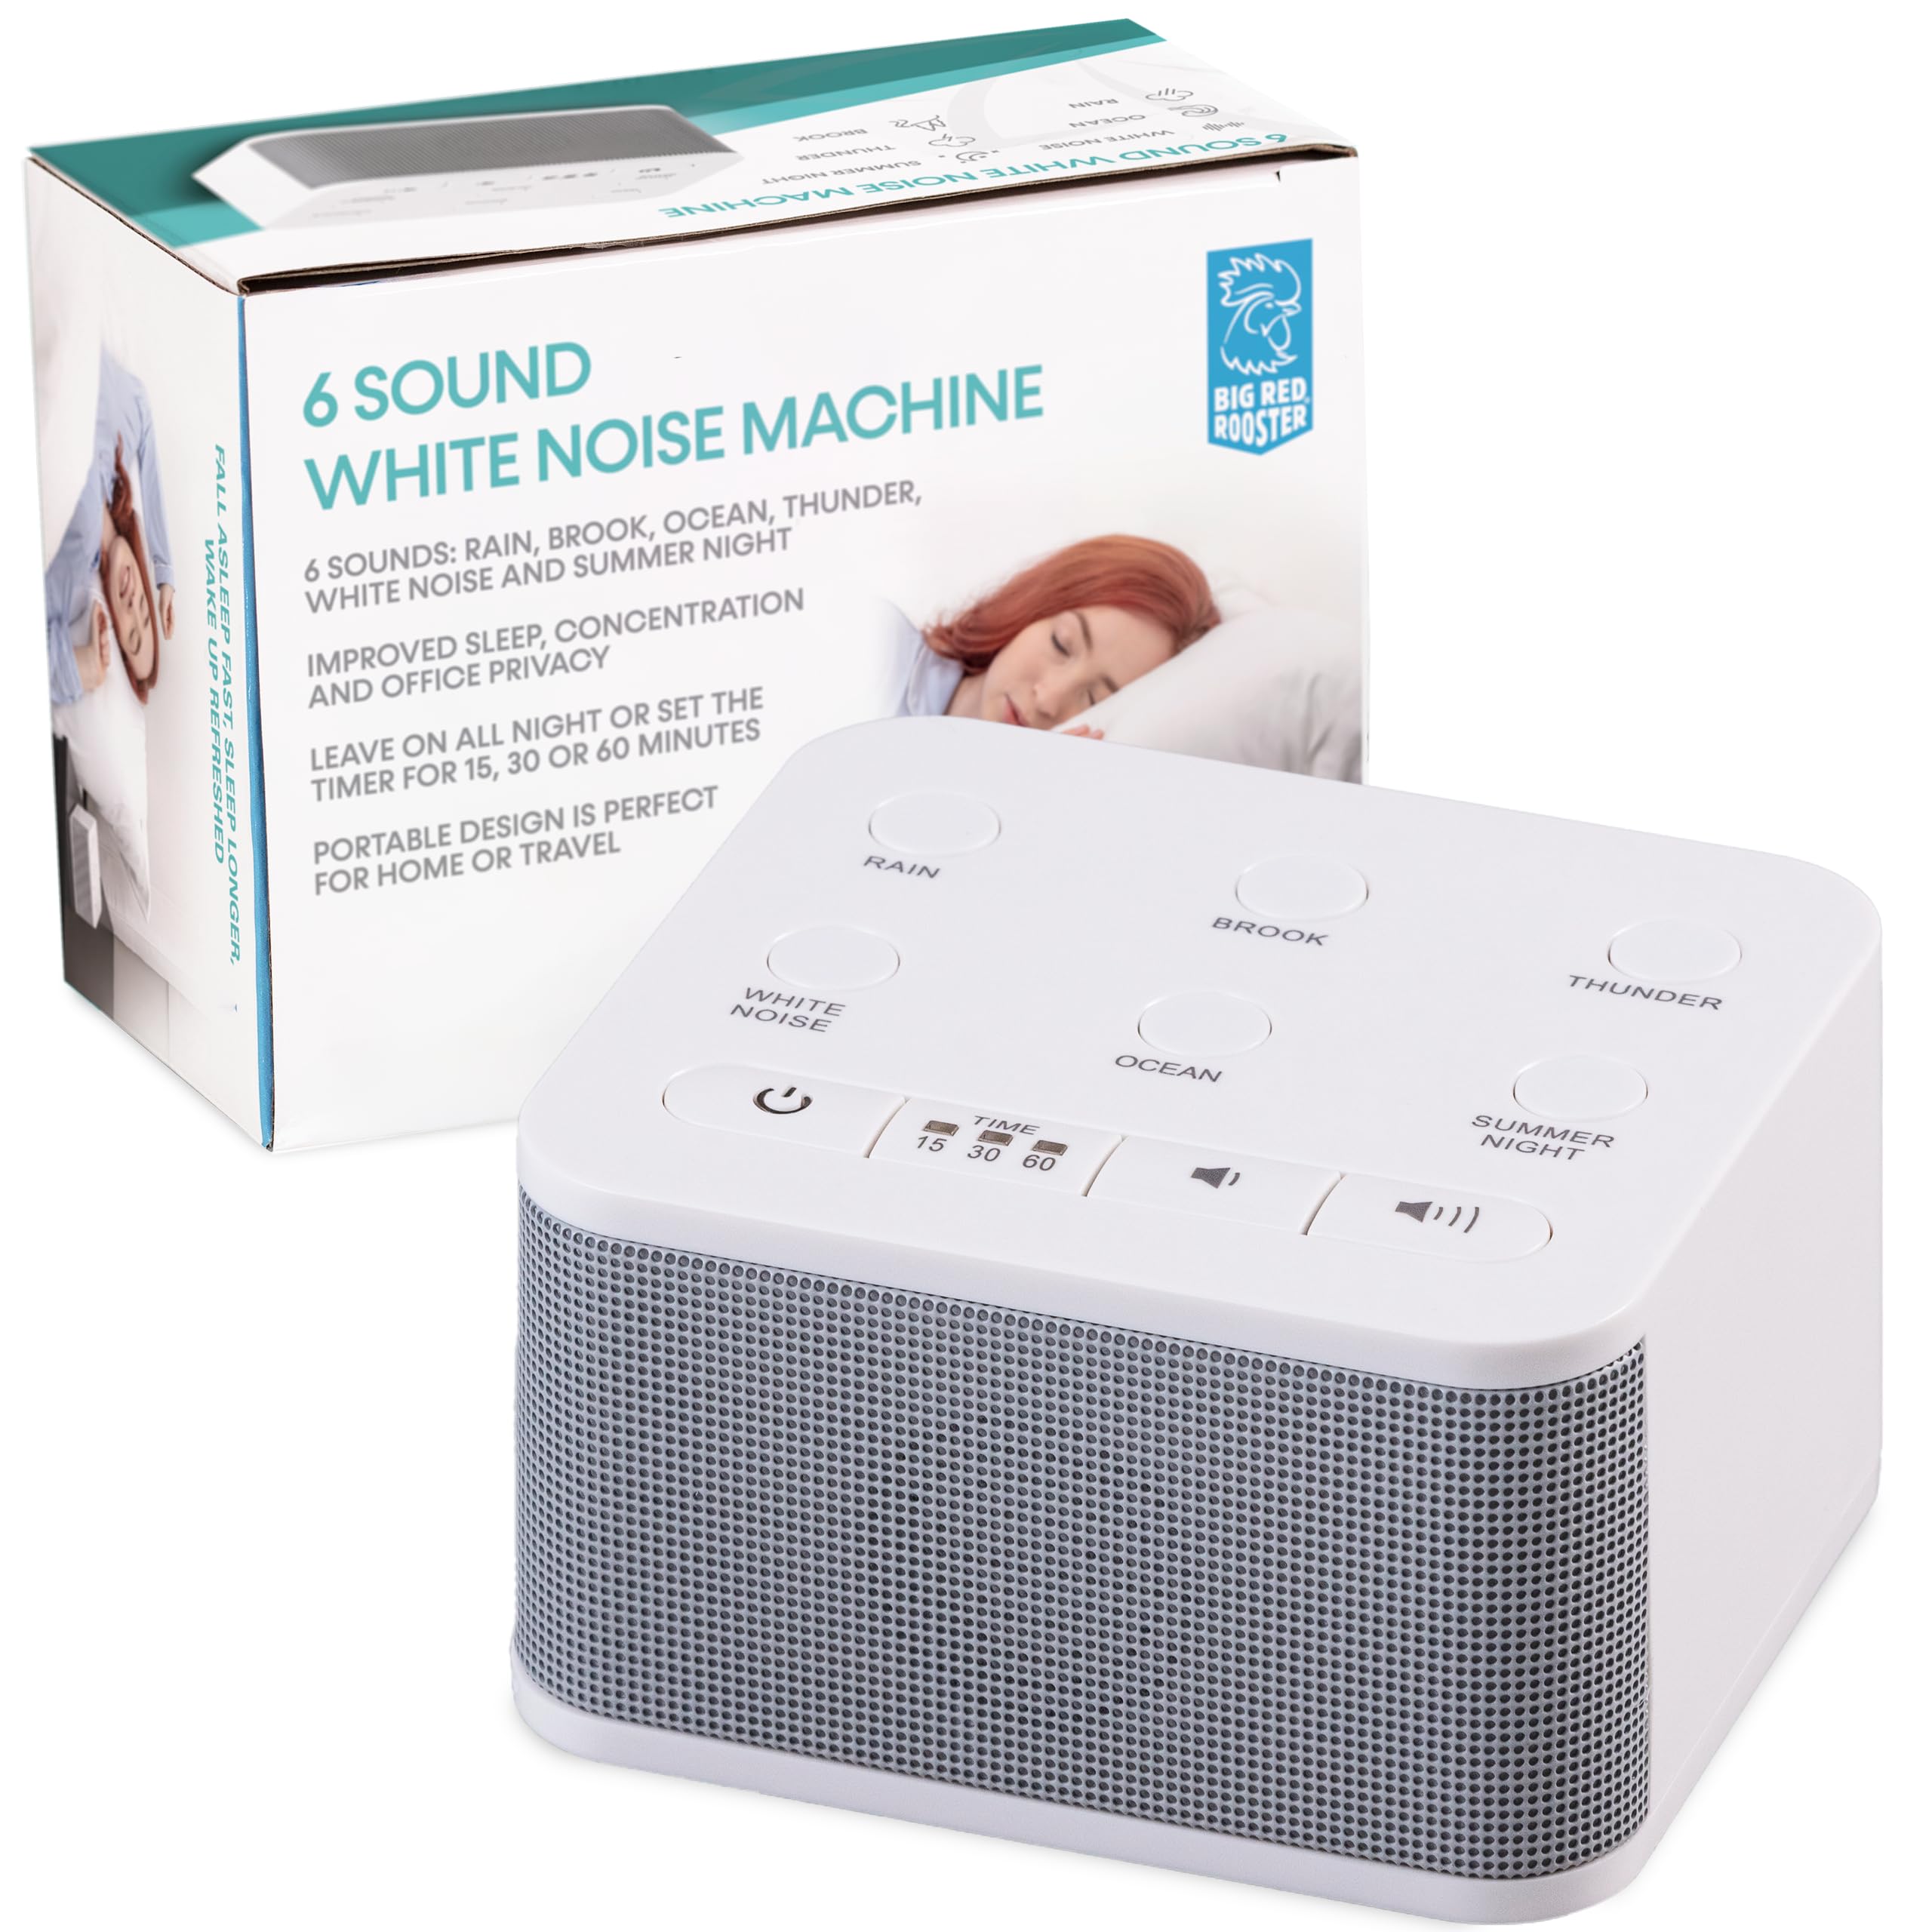 Sound Machine - White Noise Machine, Rain Machine, Portable Sleep